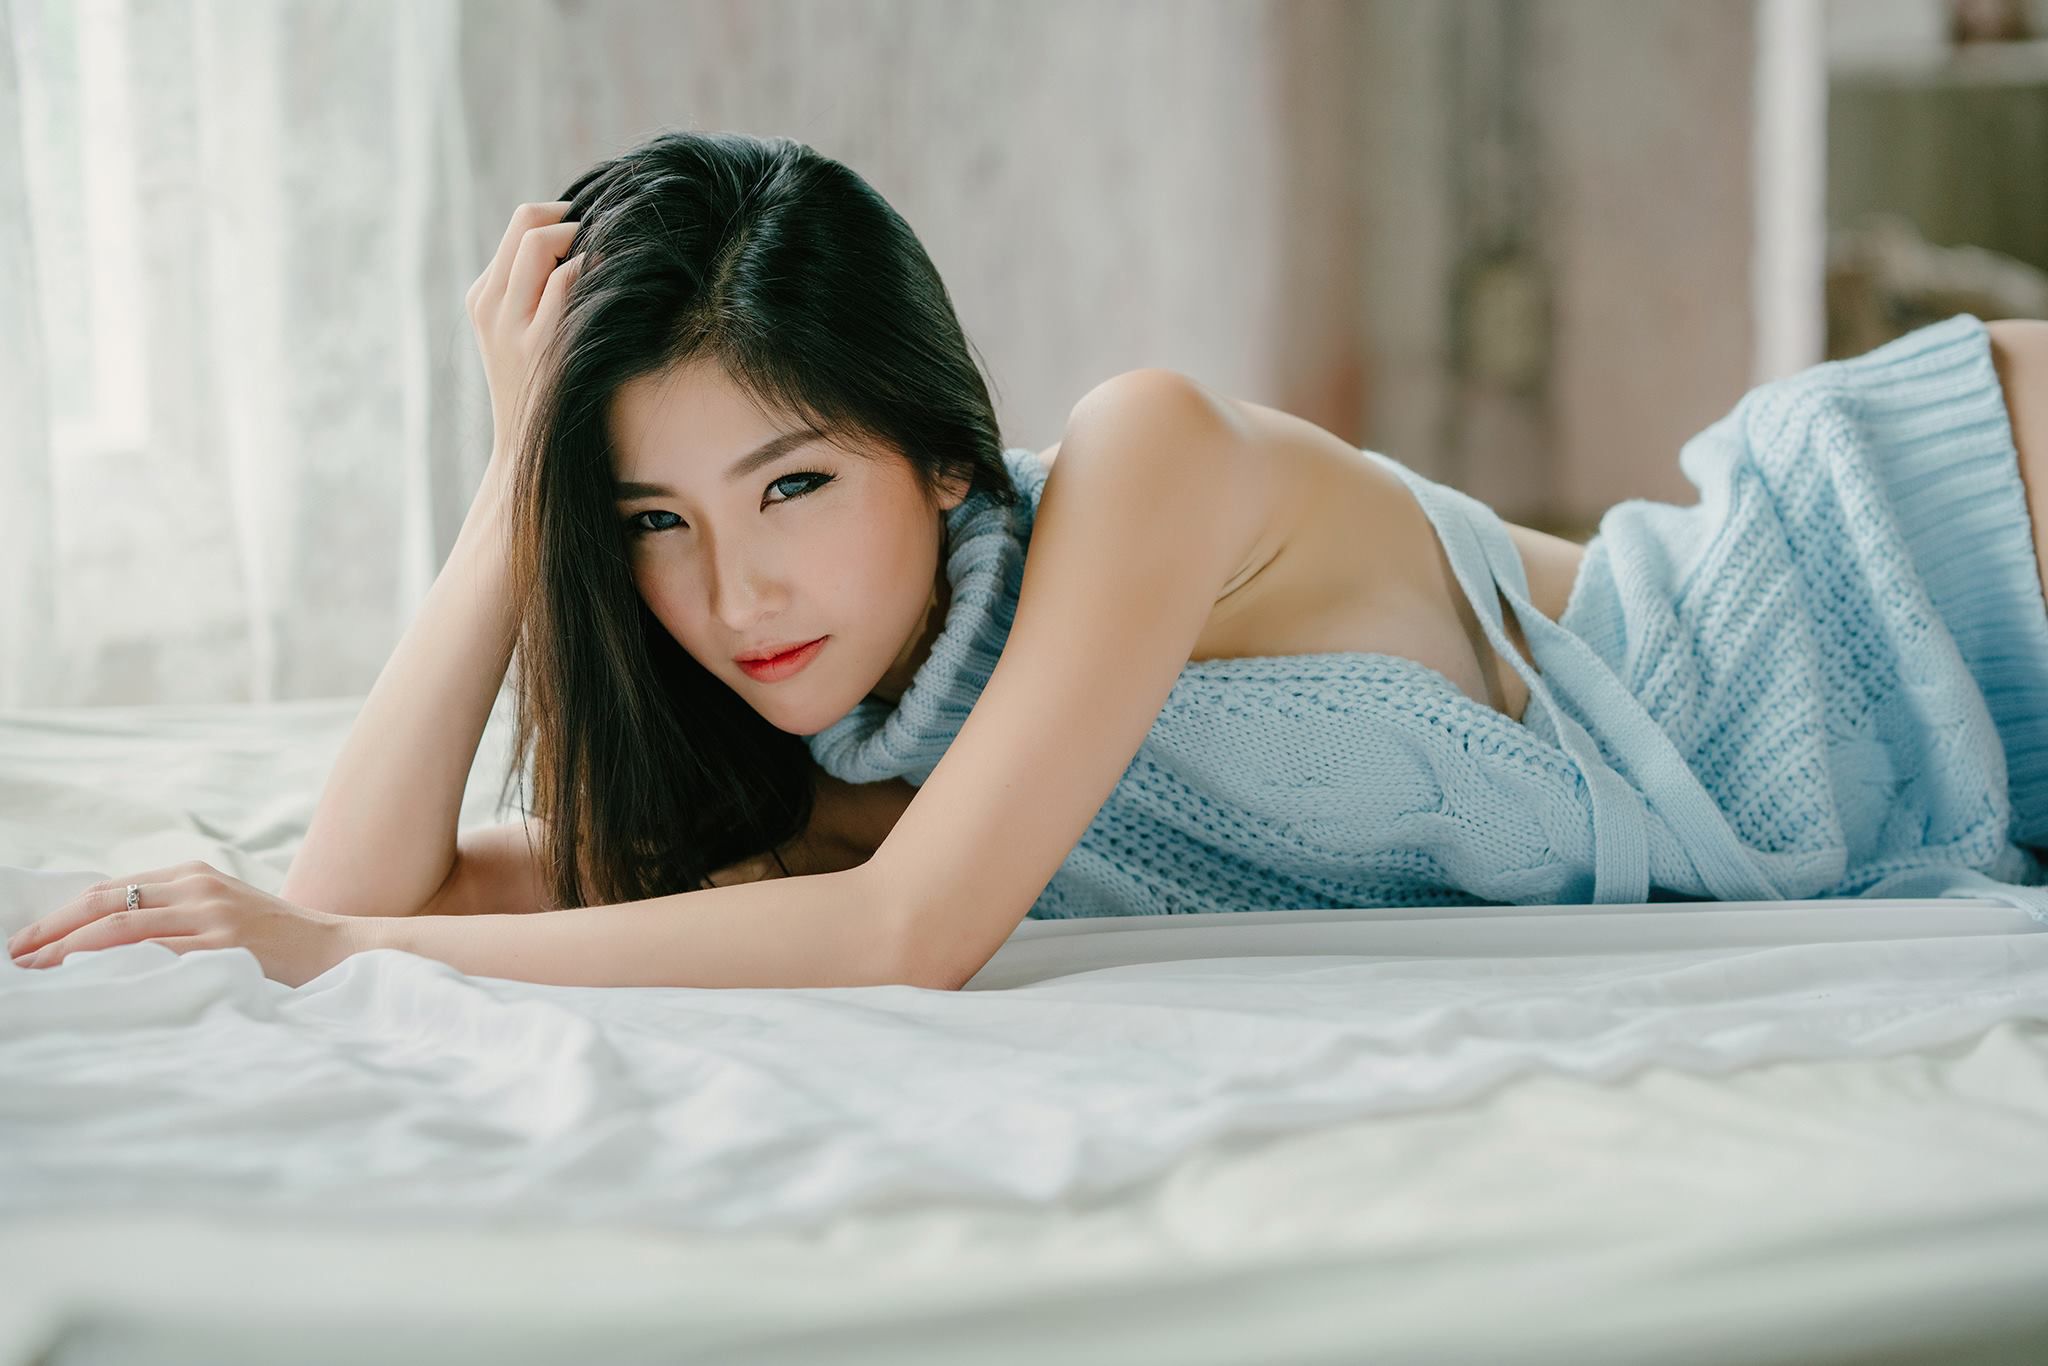 People 2048x1366 Atita Wittayakajohndet model Asian Thailand model Virgin Killer Sweater lying on side knit fabric no bra sideboob women